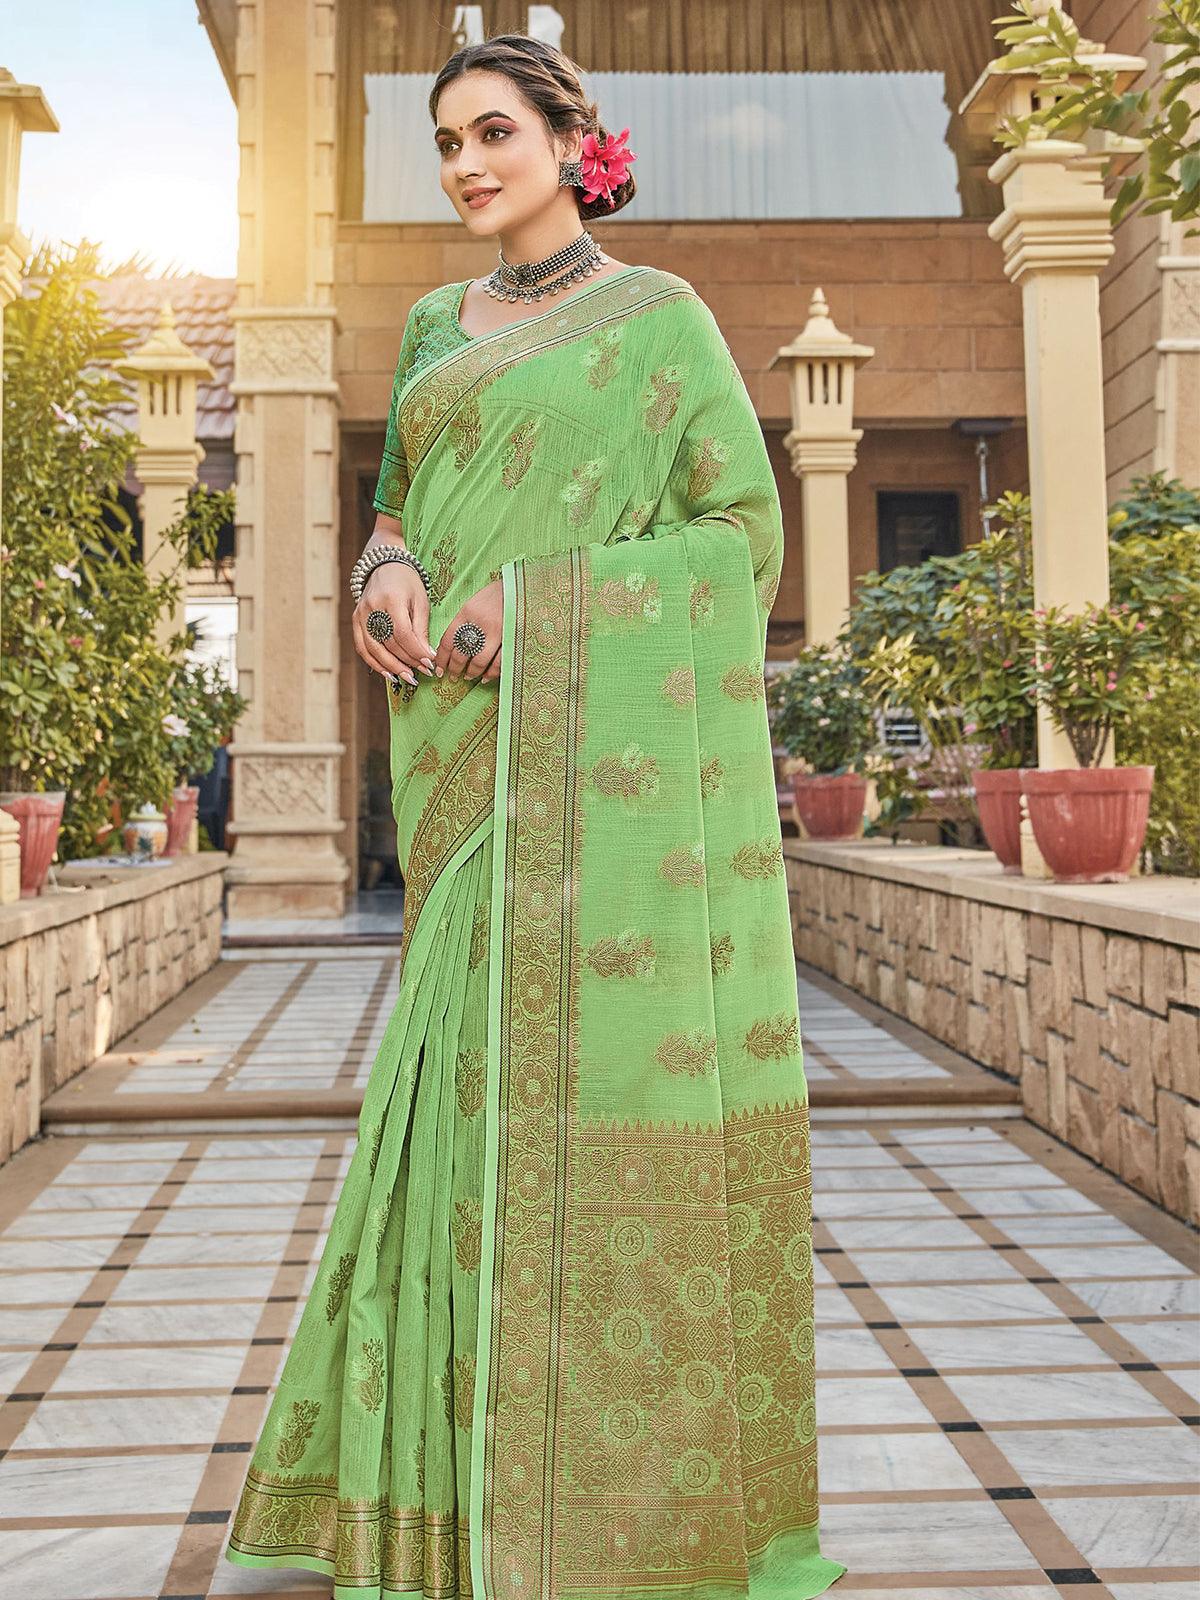 Women's Green Color Cotton Saree Pair With Cotton Blouse - Odette